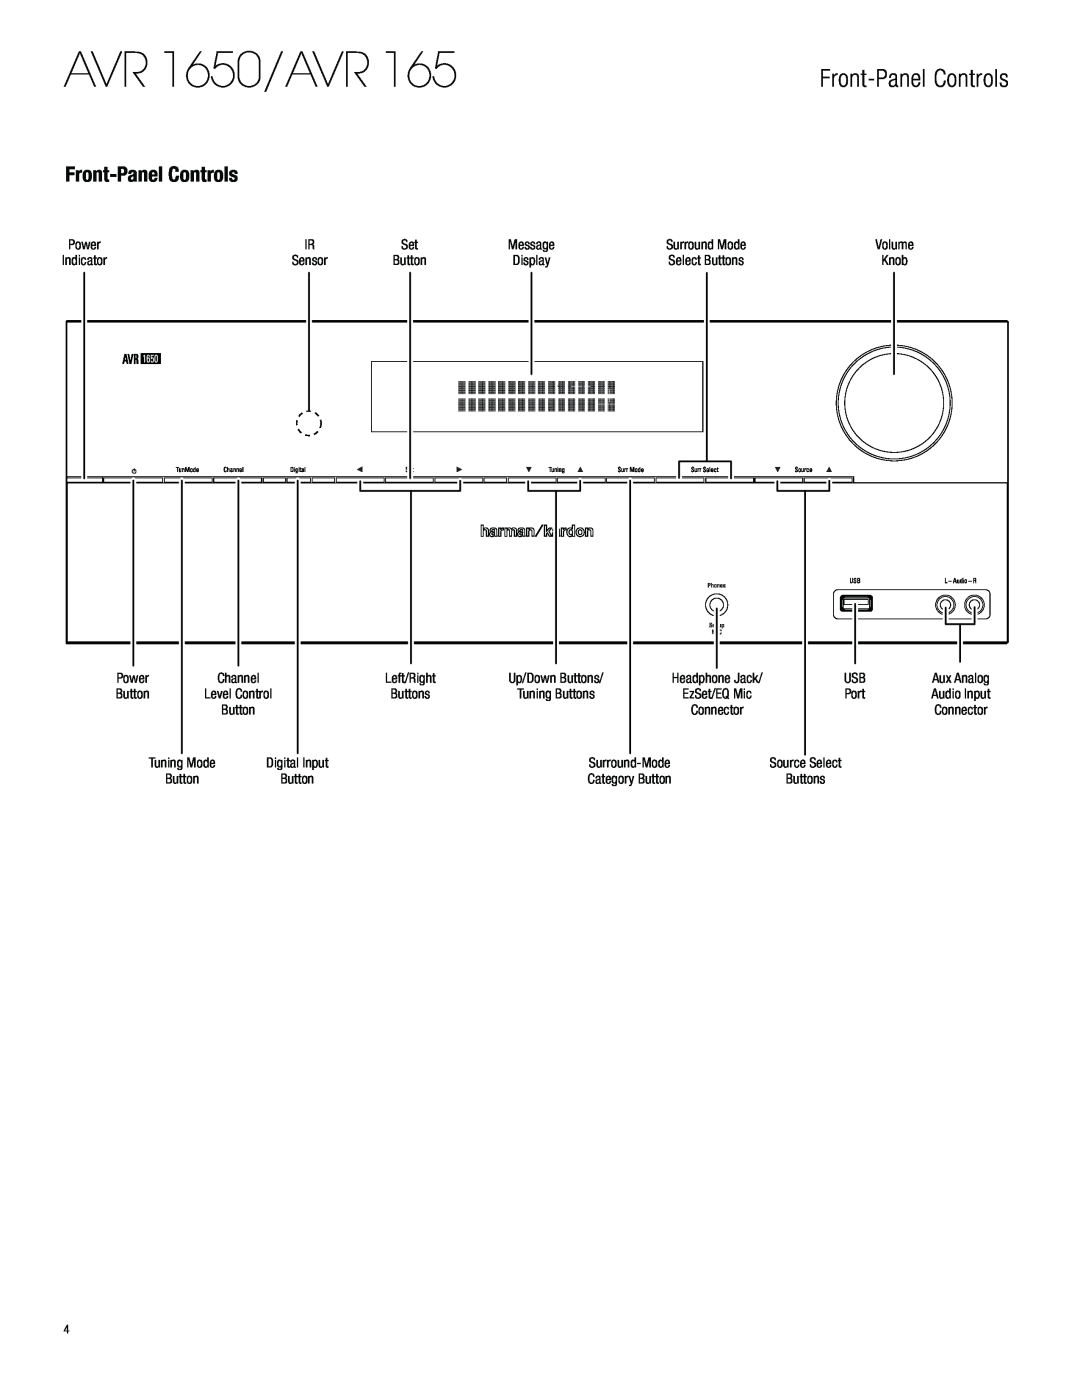 Harman-Kardon owner manual Front-PanelControls, AVR 1650/AVR 